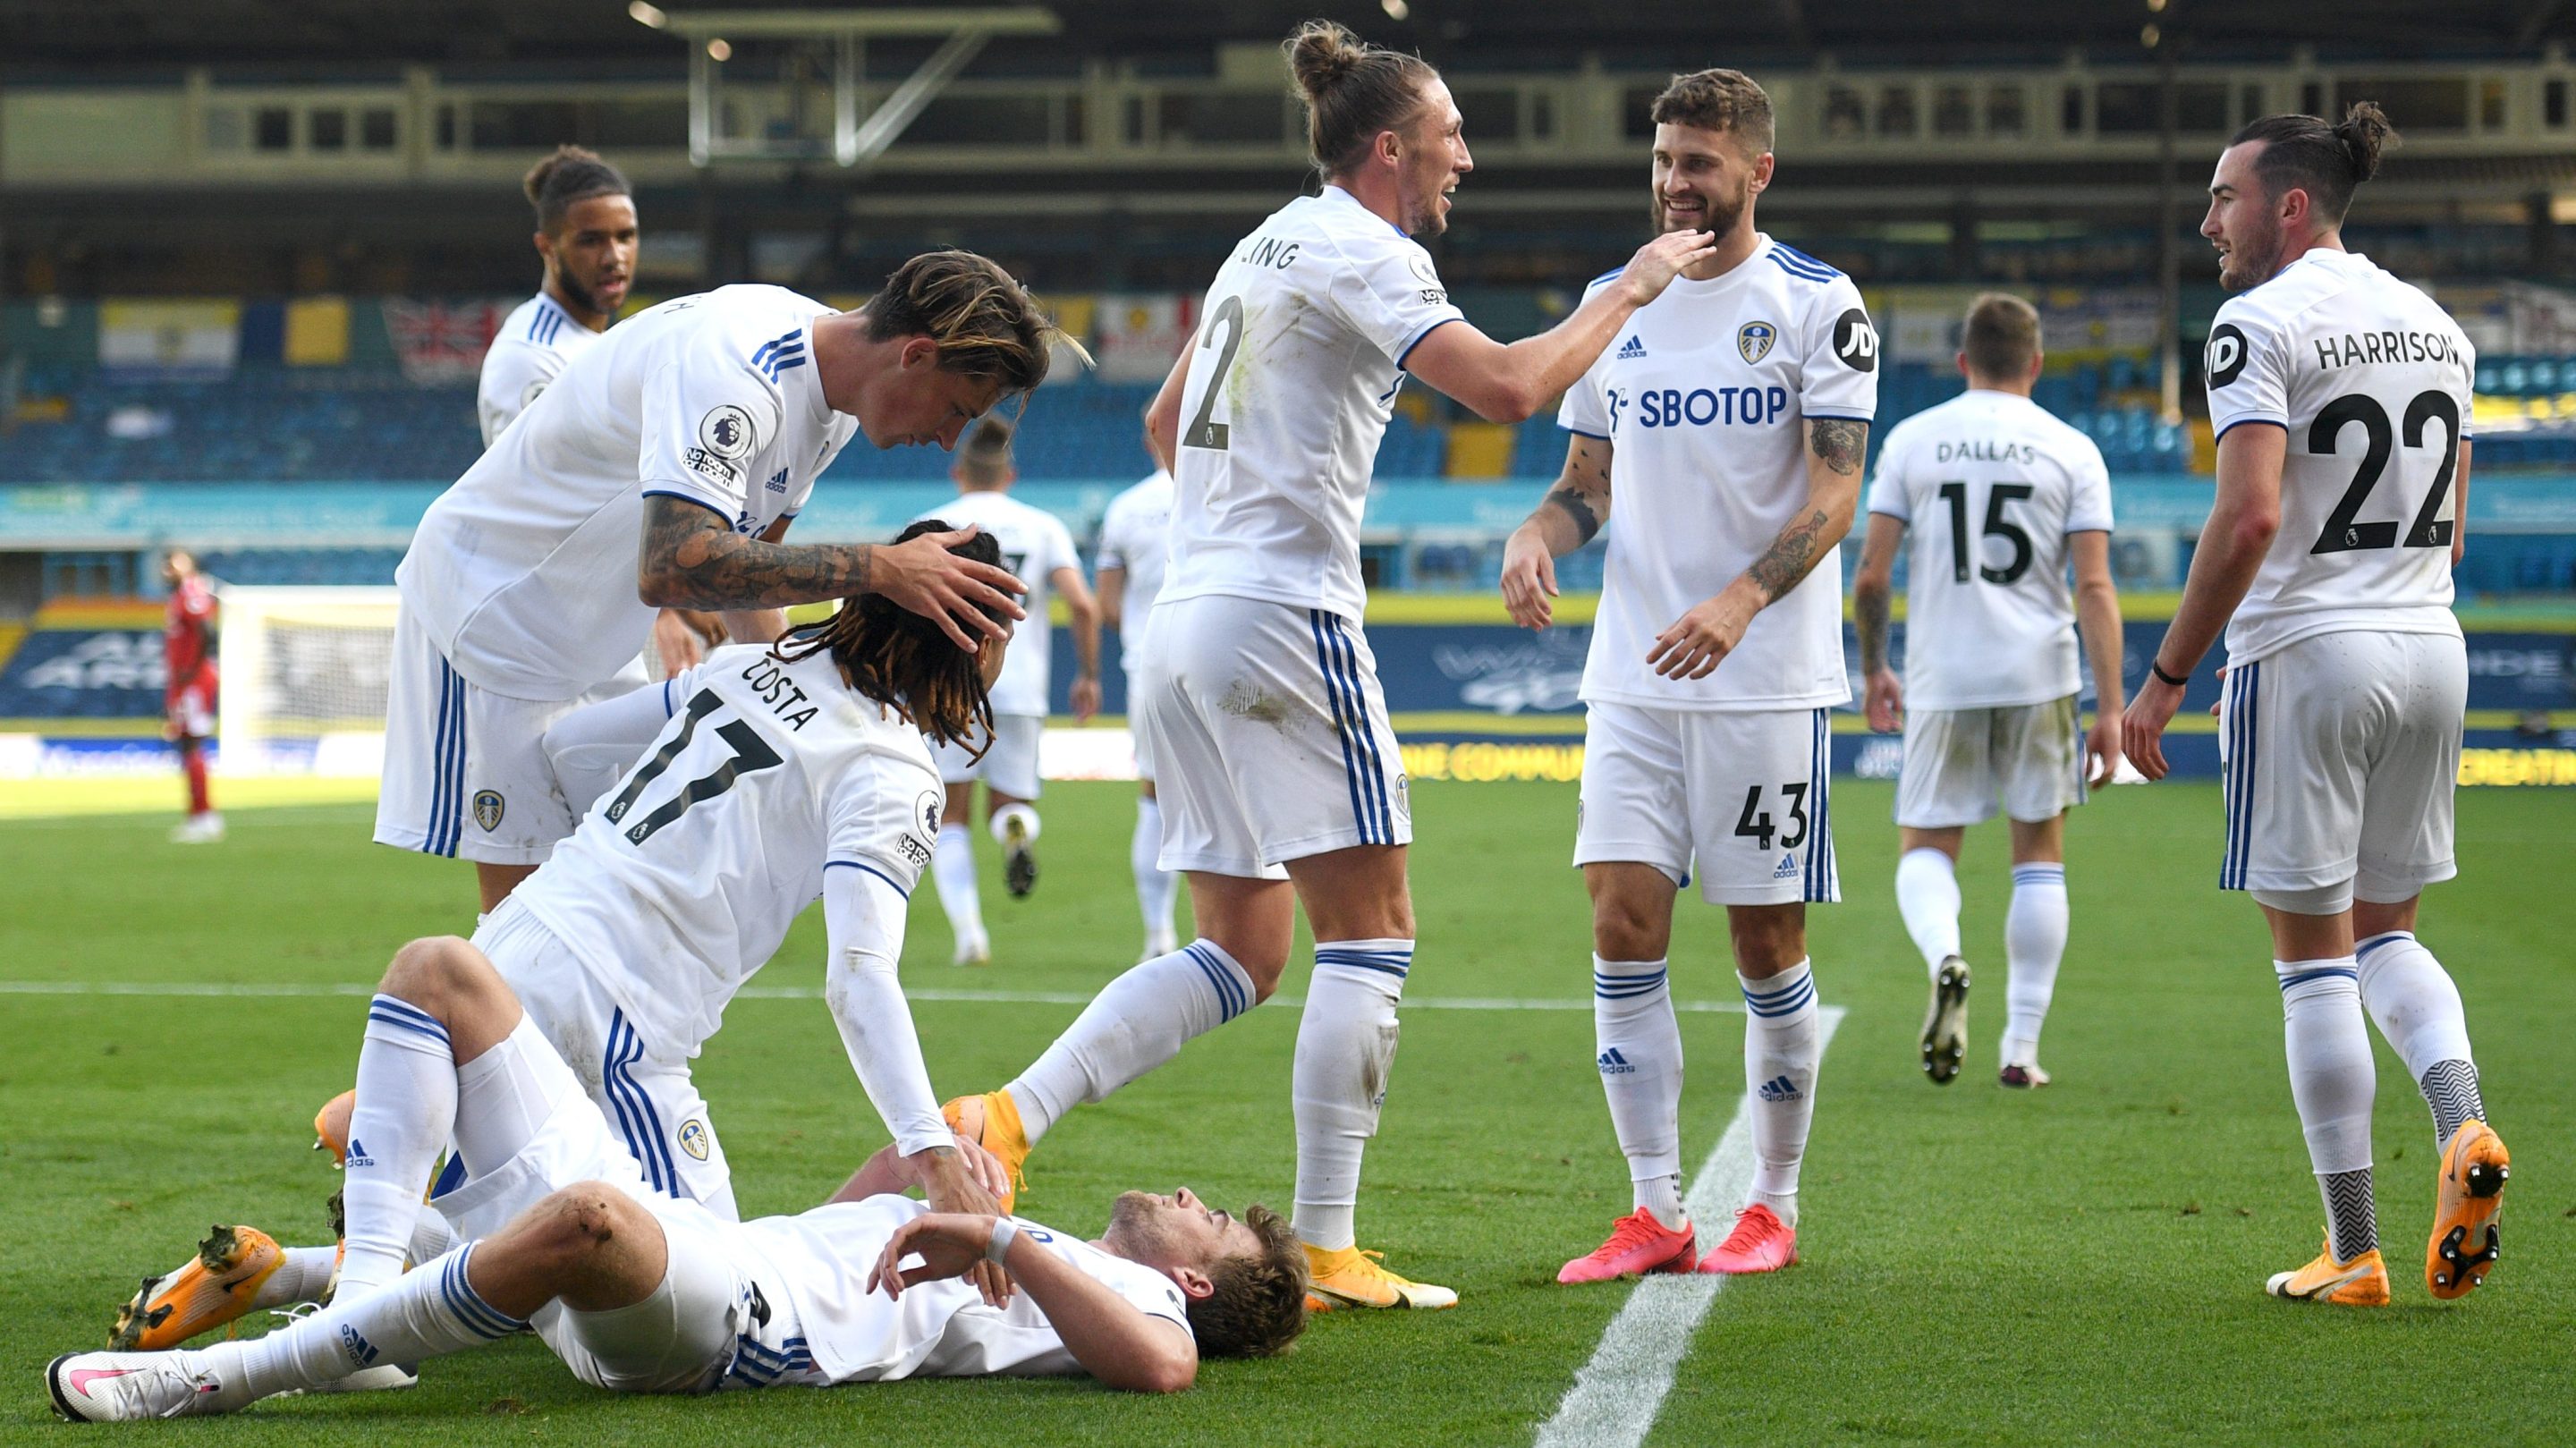 Leeds United celebrates after scoring against Fulham